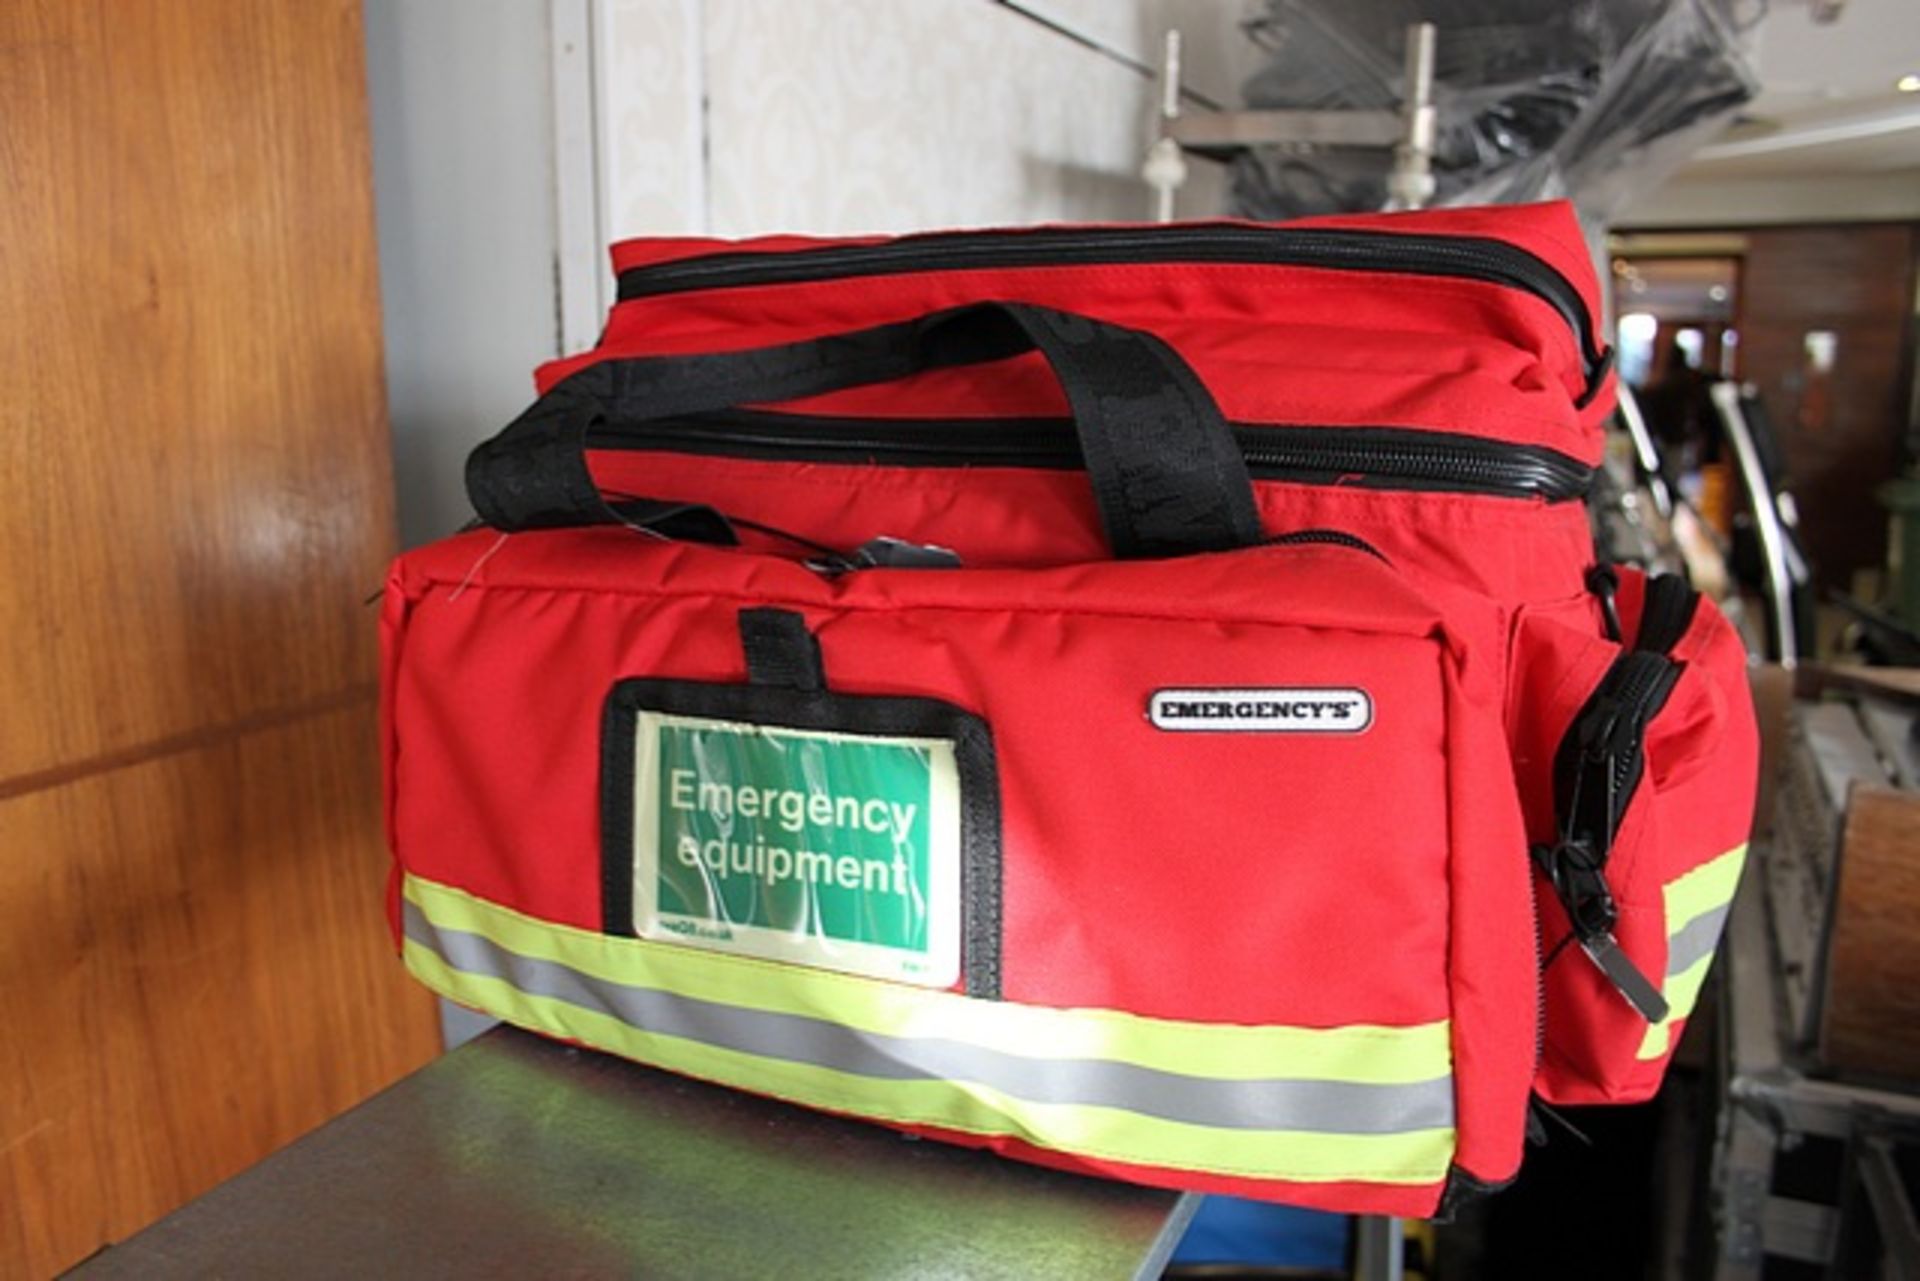 EVA-Q8 Medical Life Support Bag Fully Kitted